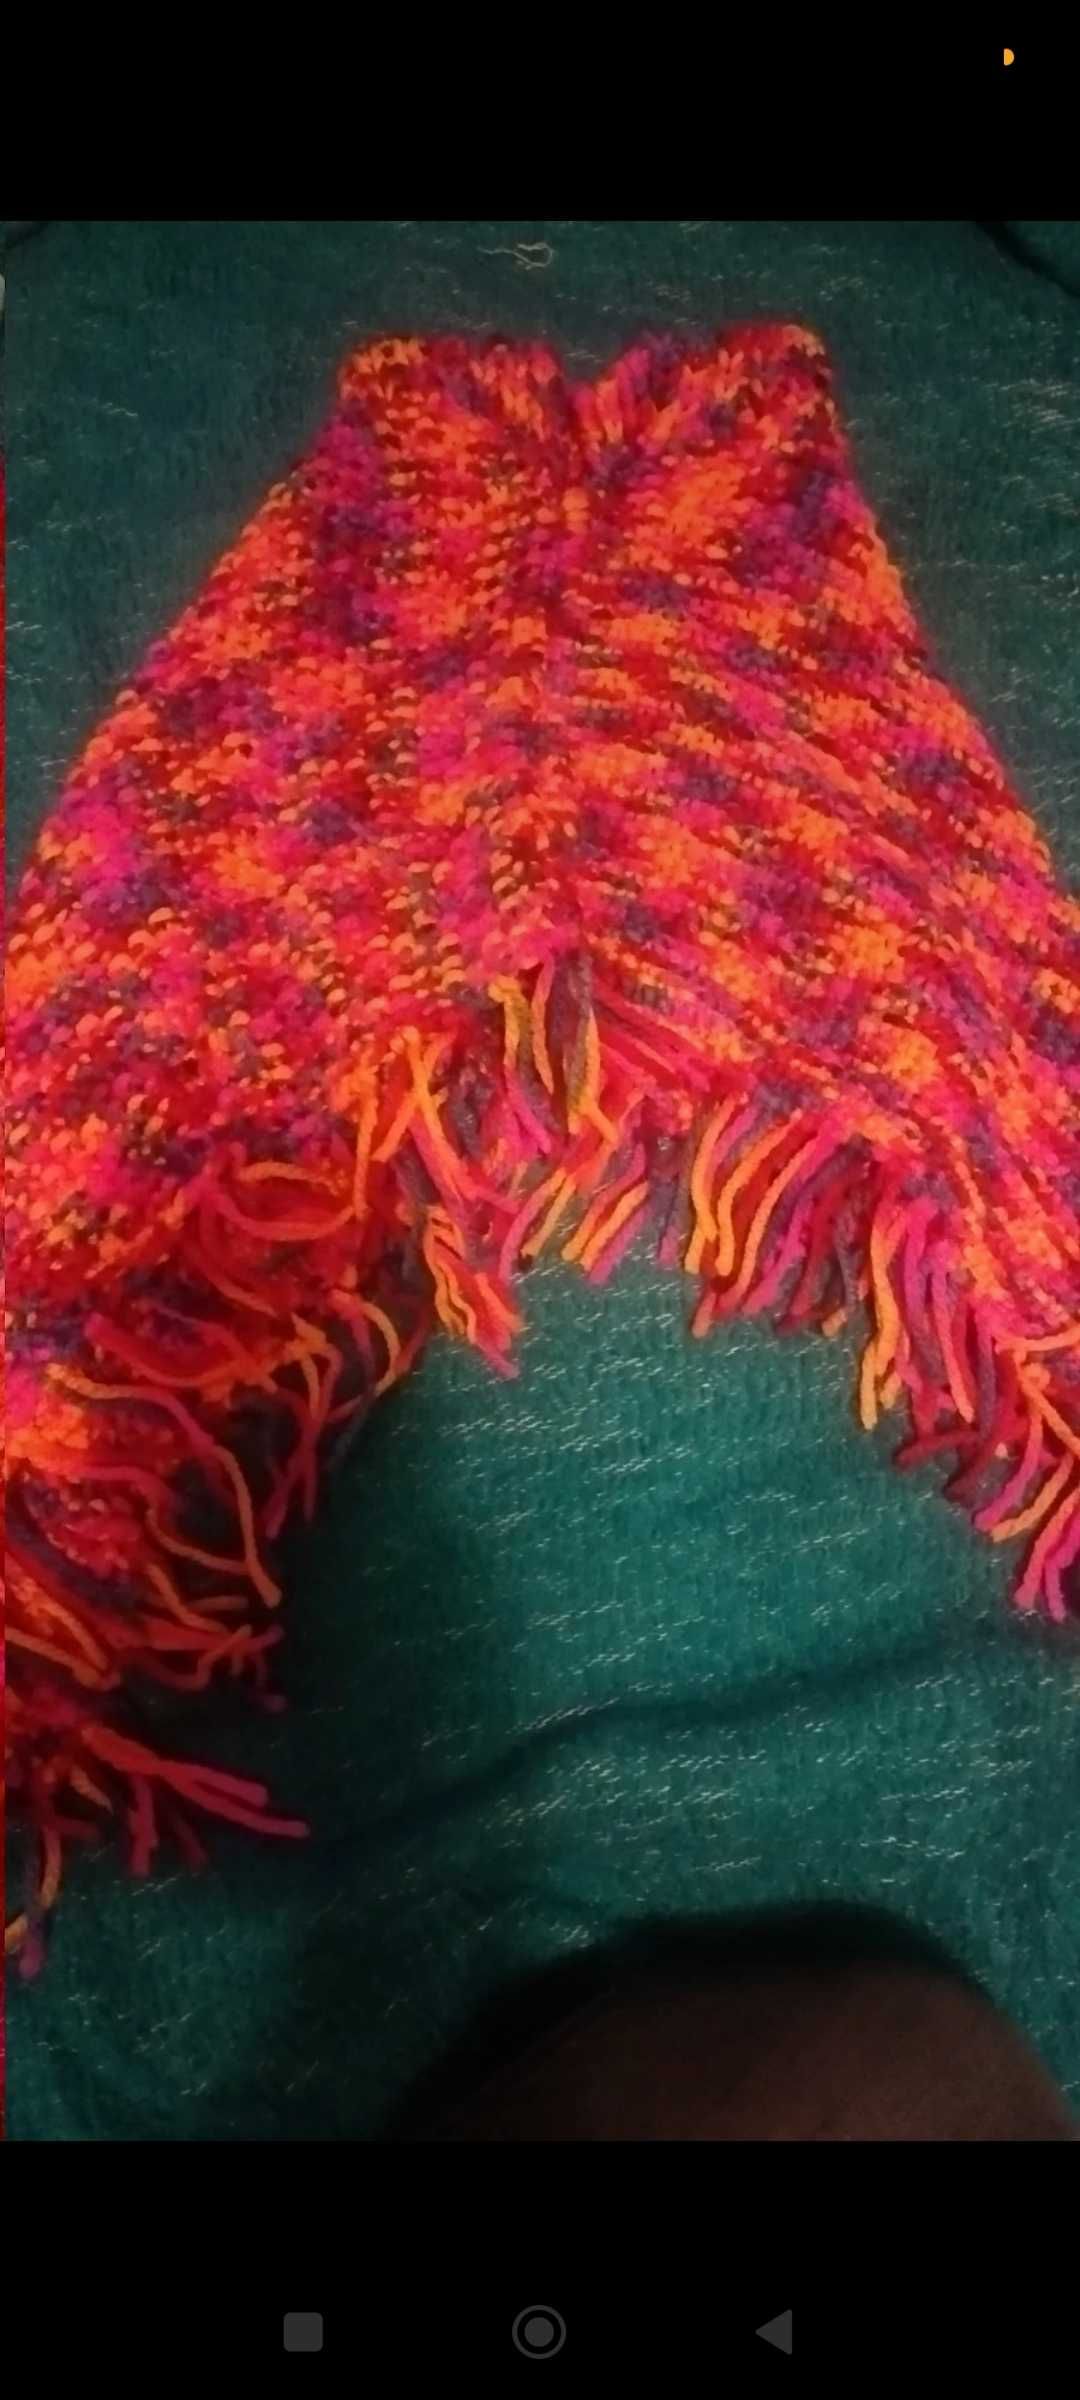 Xaile em Crochet